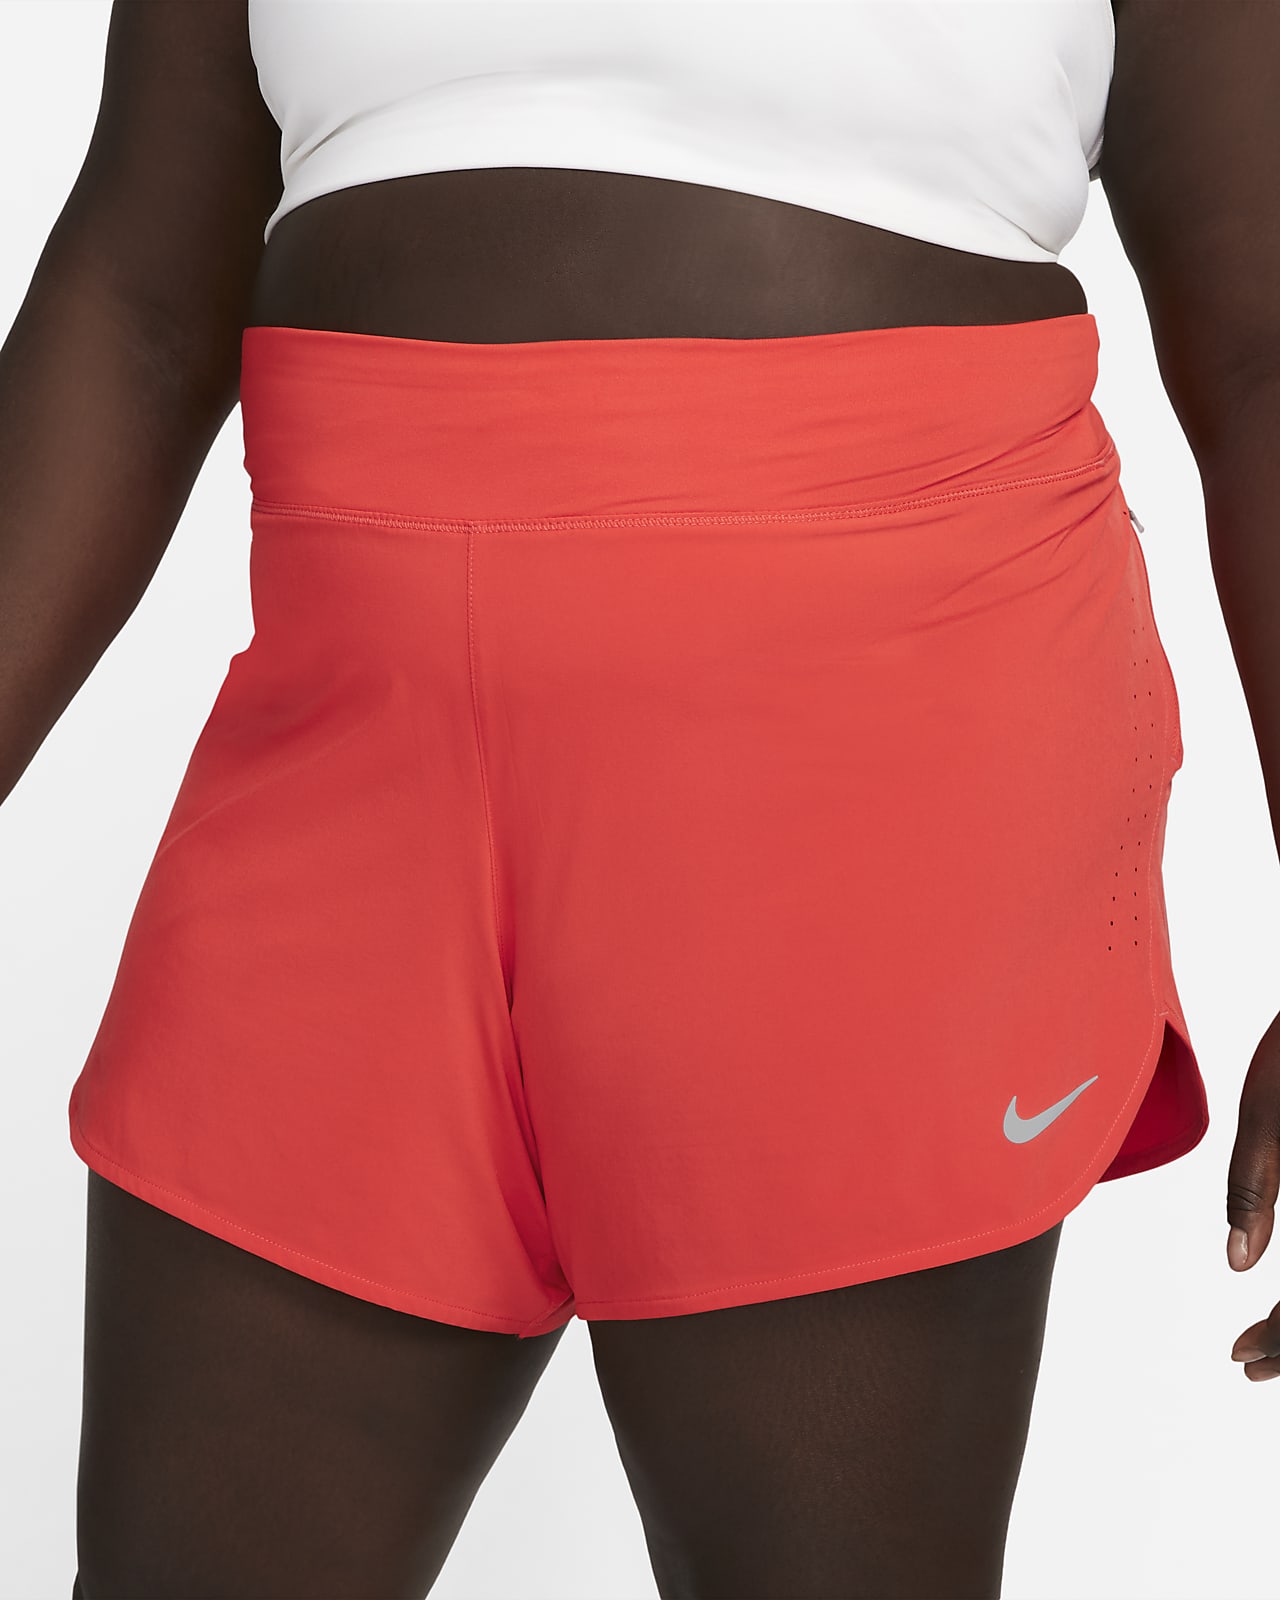 Eclipse Women's Shorts Size). Nike.com